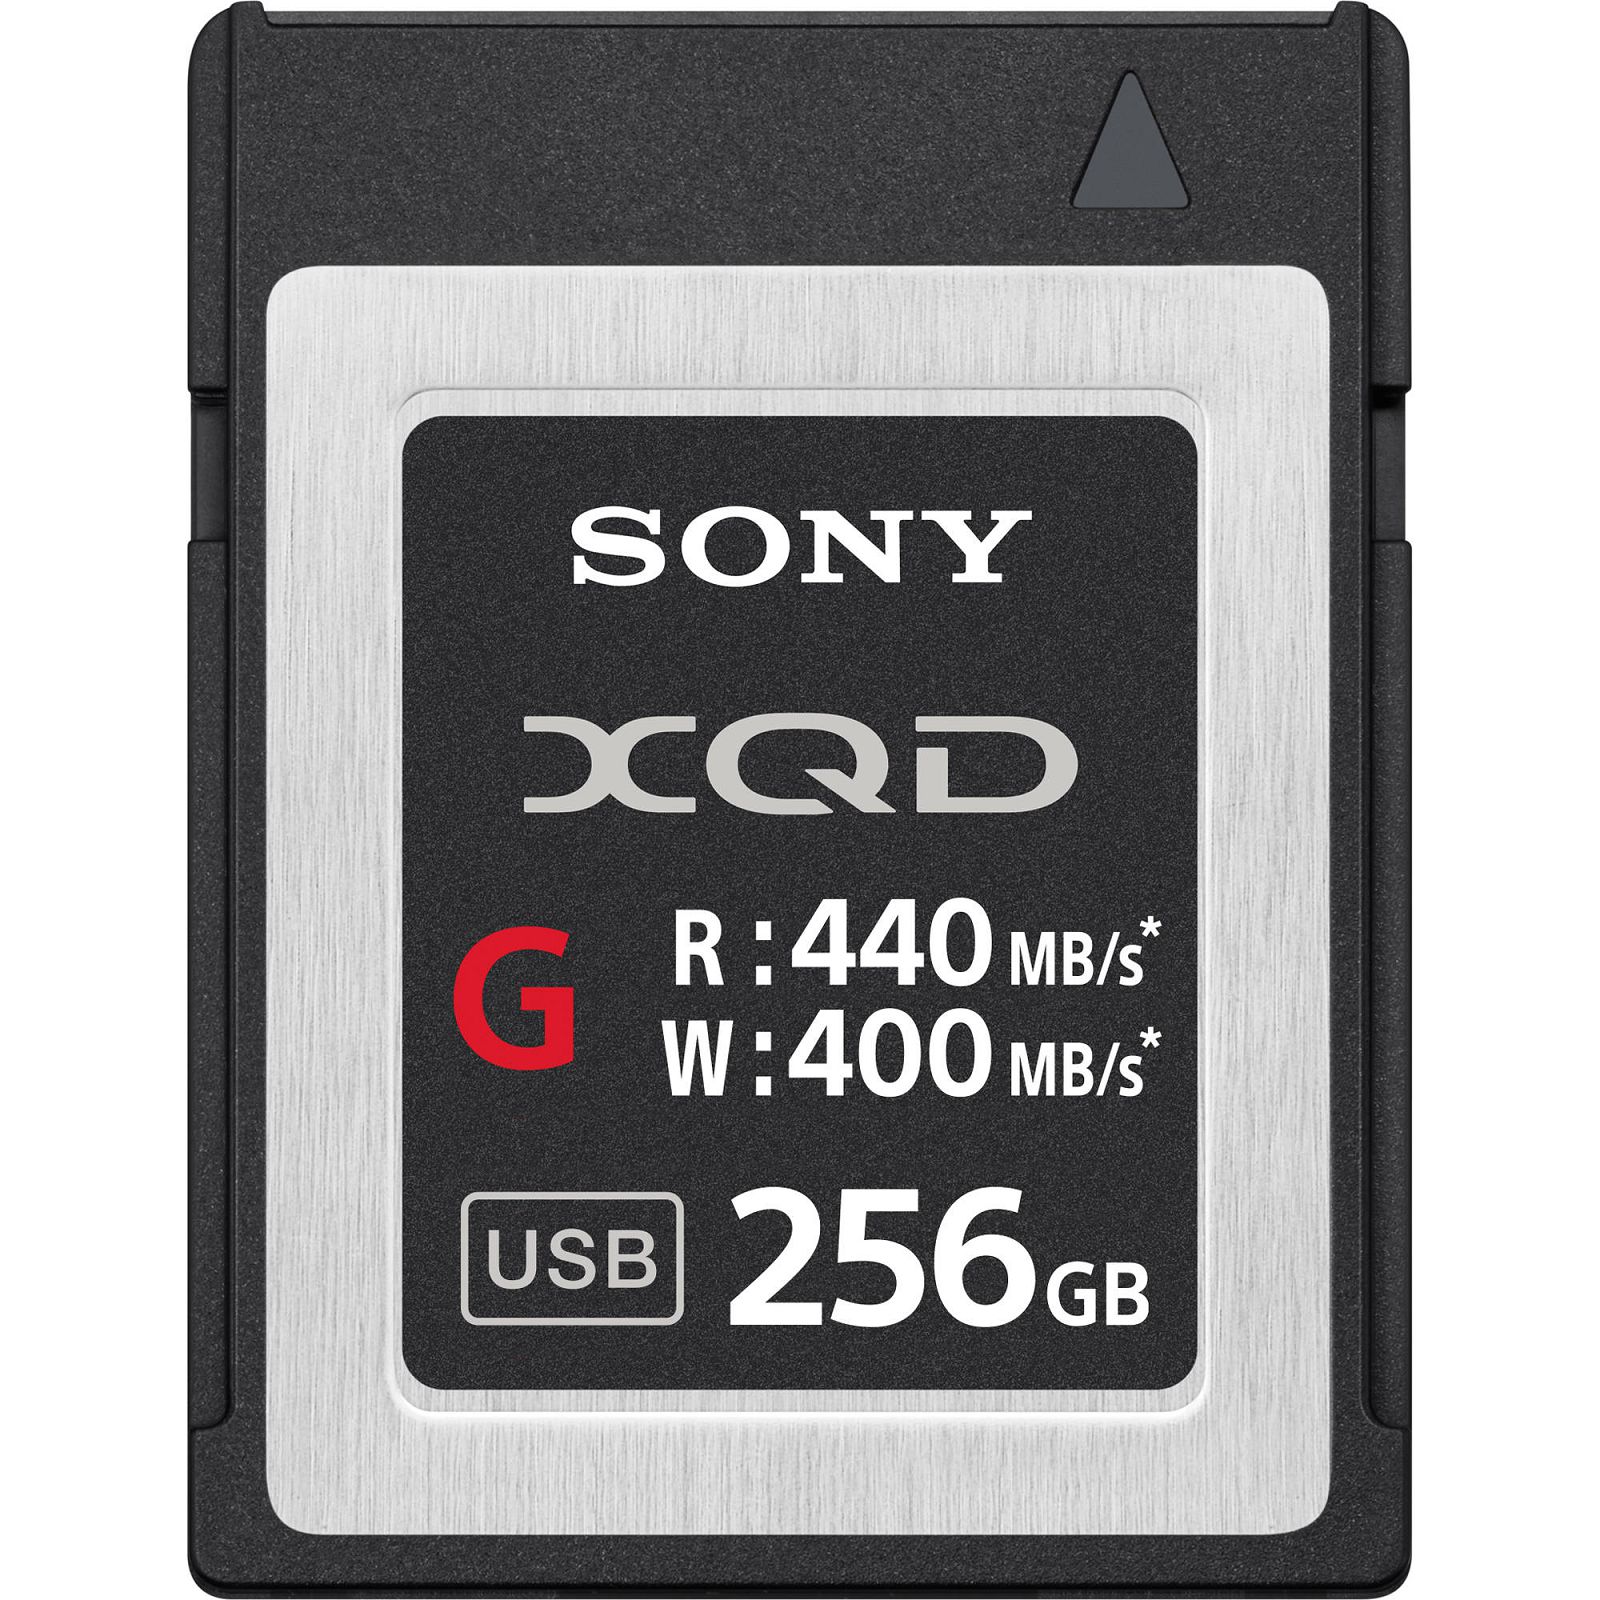 Sony XQD 256GB 440MB/s 400MB/s G Series High Speed Memory Card memorijska kartica (QDG256E-R)